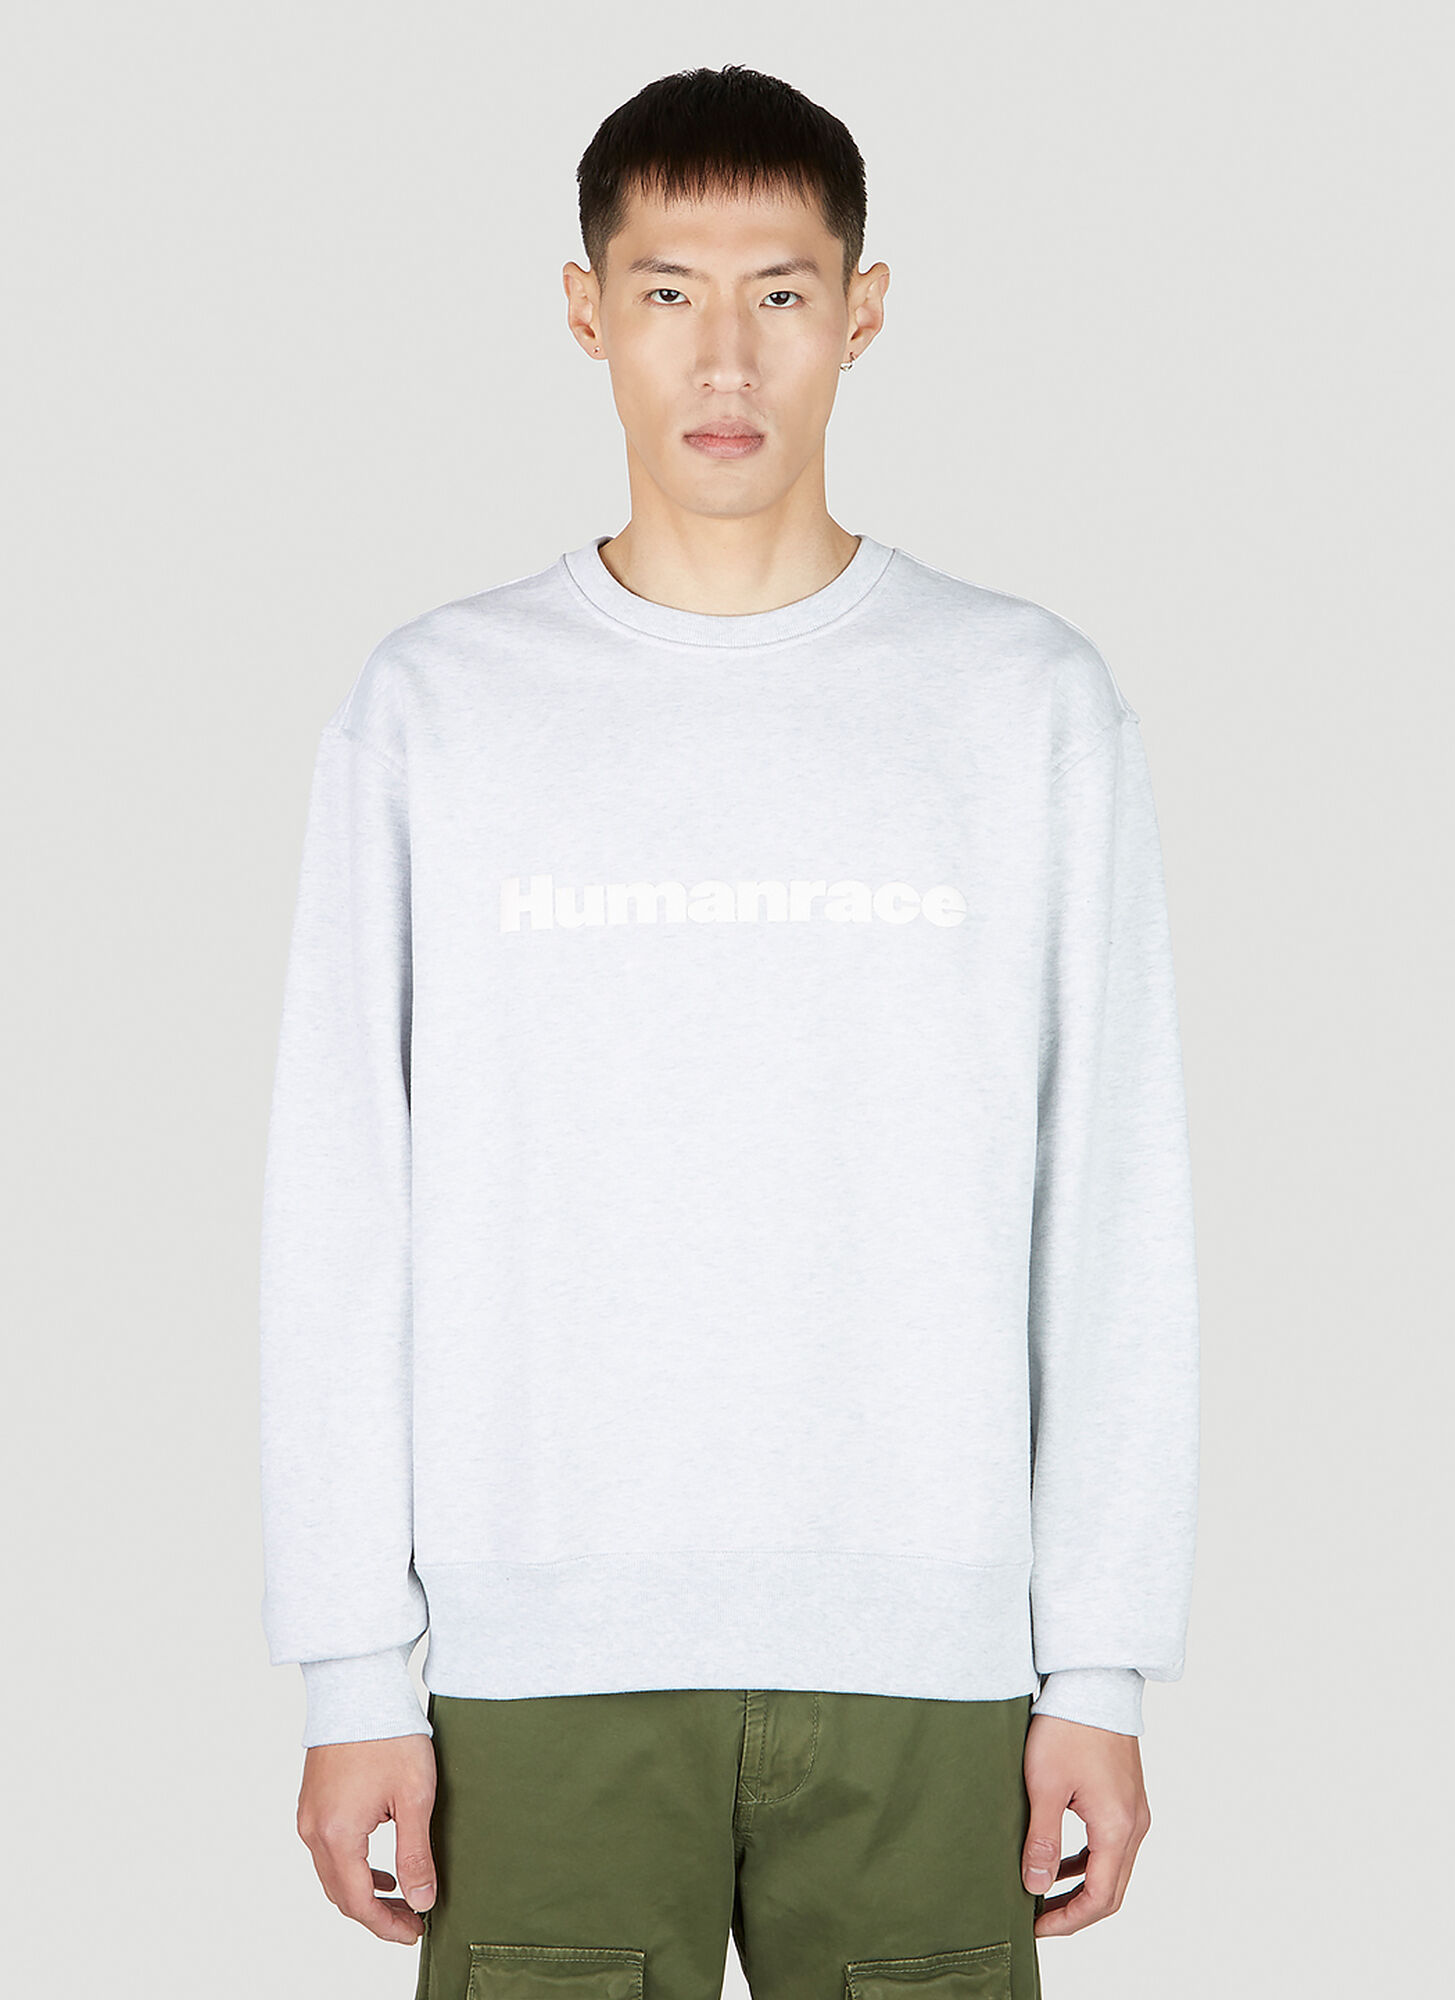 Adidas X Humanrace Basics Sweatshirt Male Grey